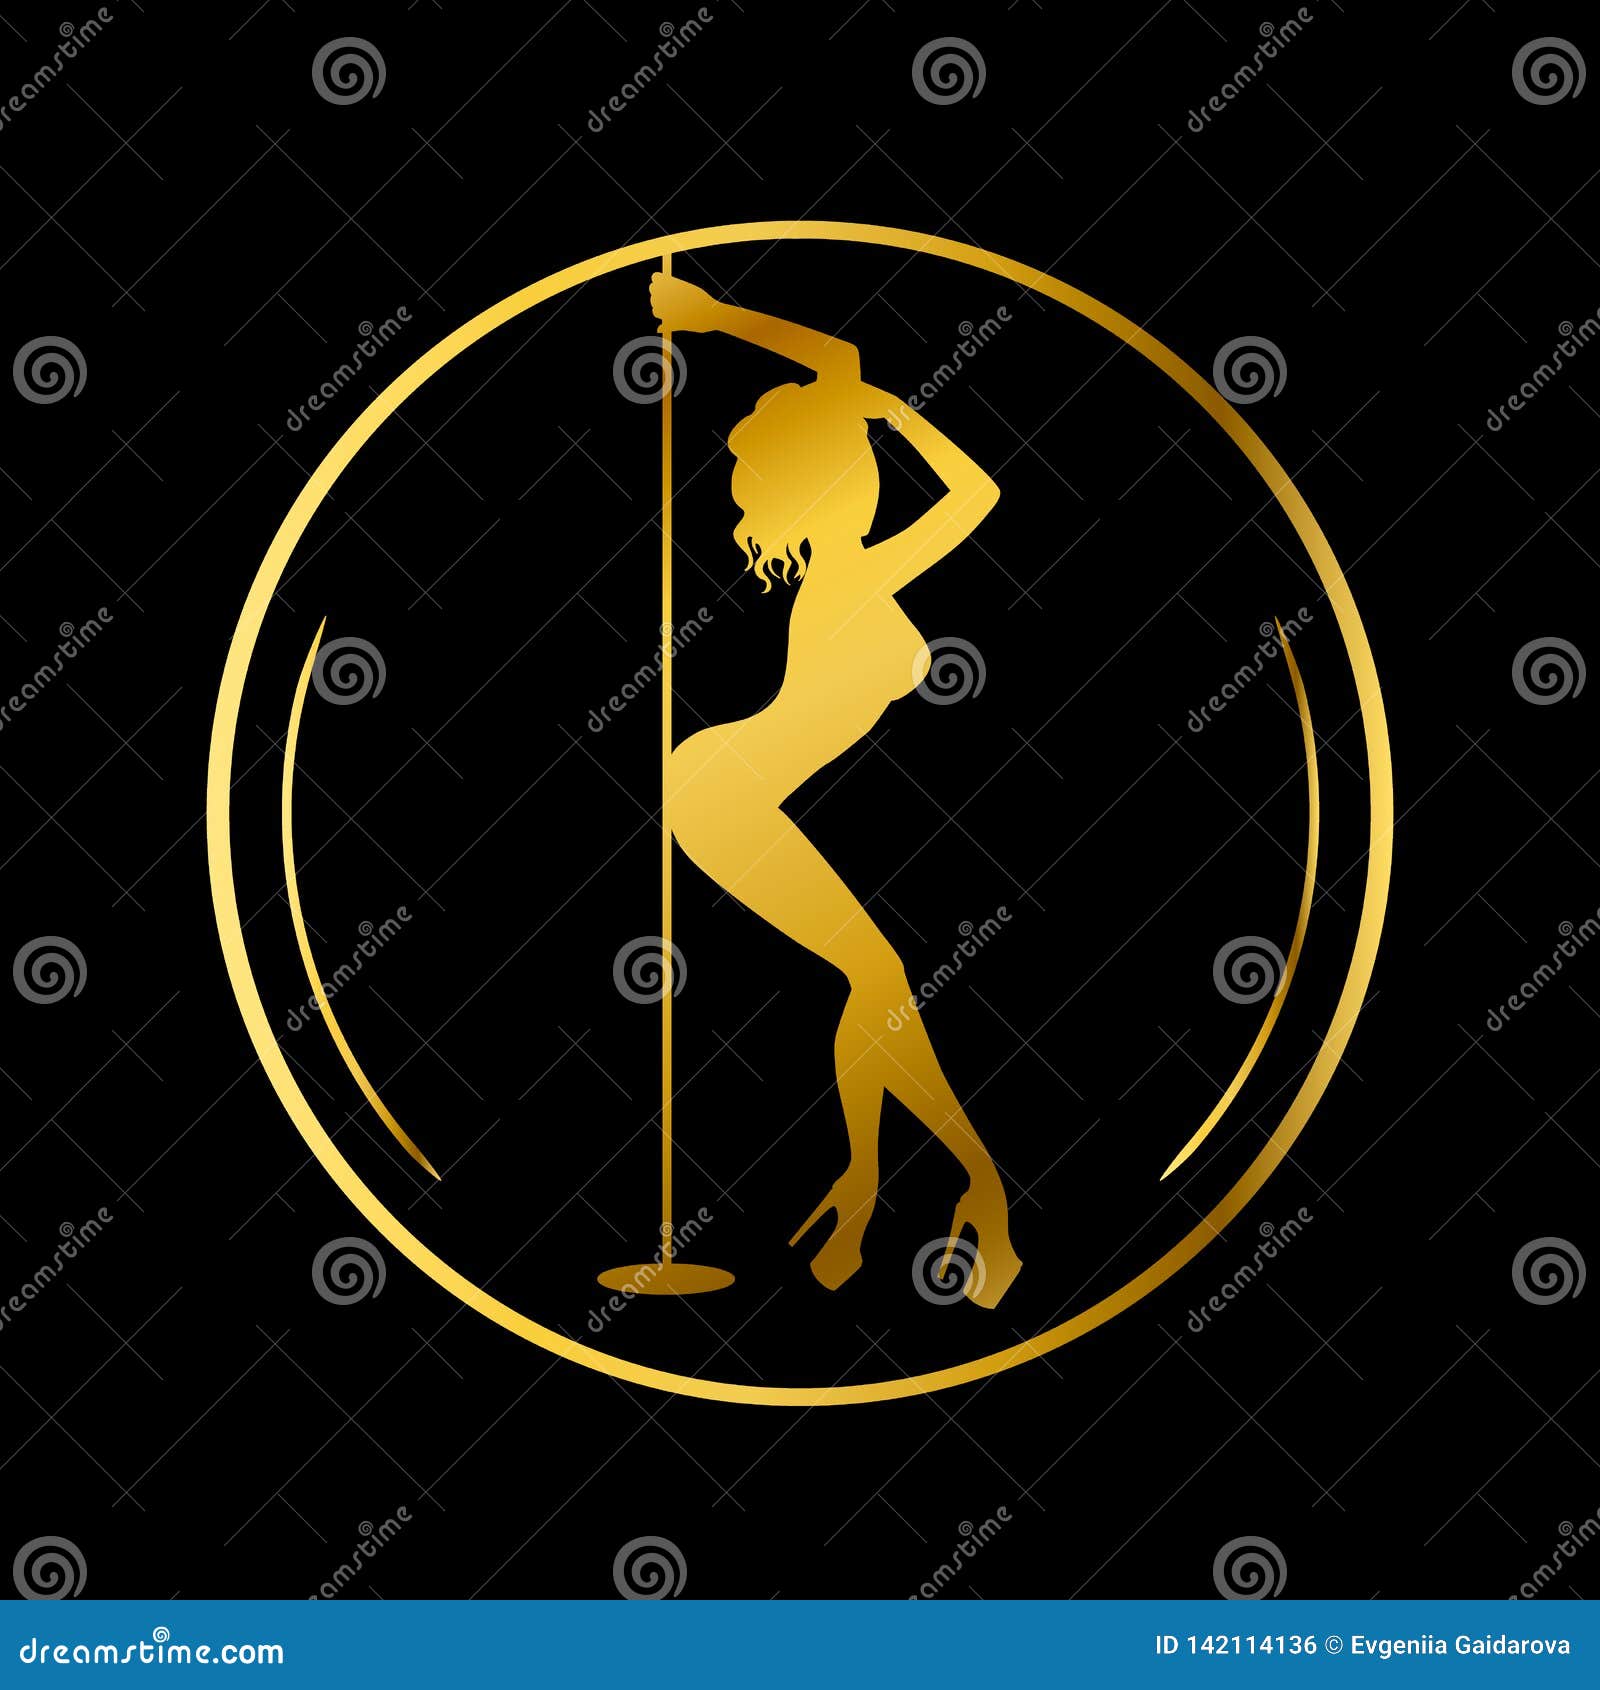 gold logo for dance studio, pole dance, stripper club